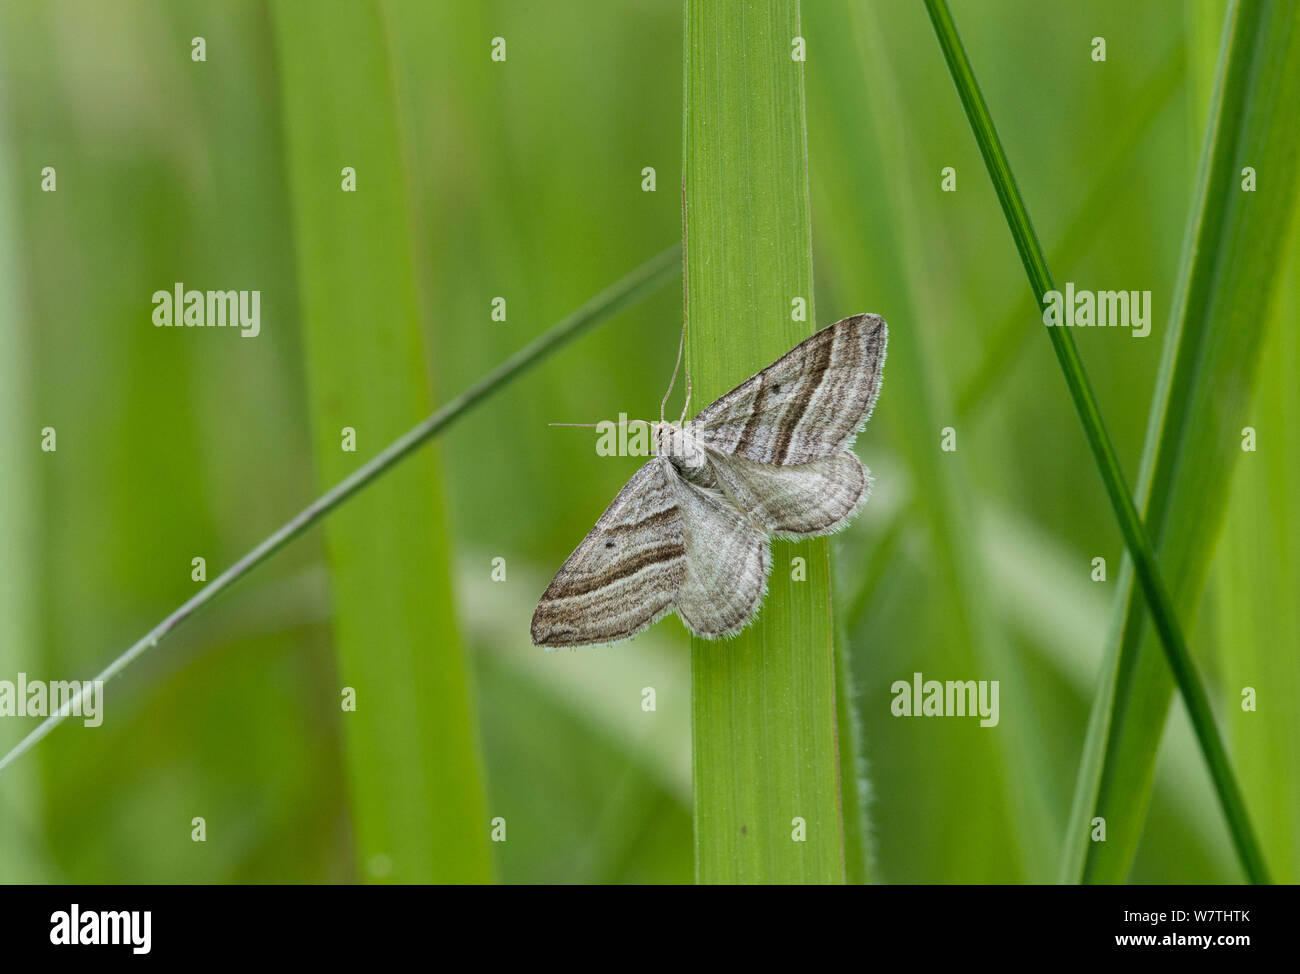 A strisce oblique tarma (Phibalapteryx virgata) maschio, su erba, Finlandia meridionale, Giugno. Foto Stock